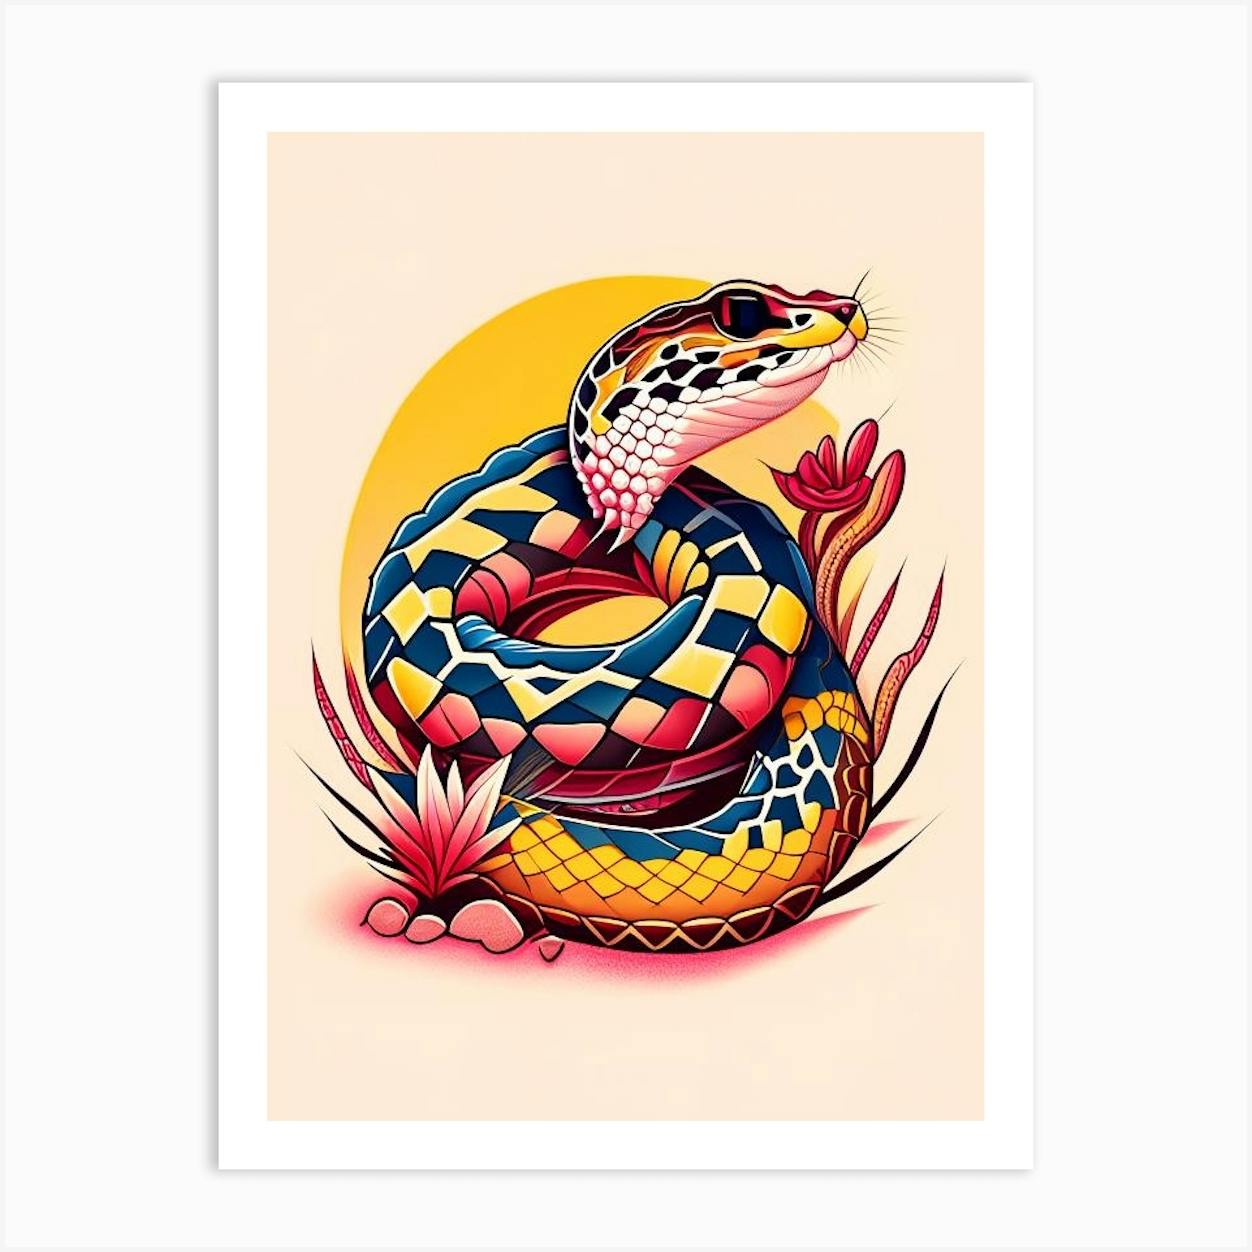 60 Rattlesnake Tattoo Designs For Men  Manly Ink Ideas